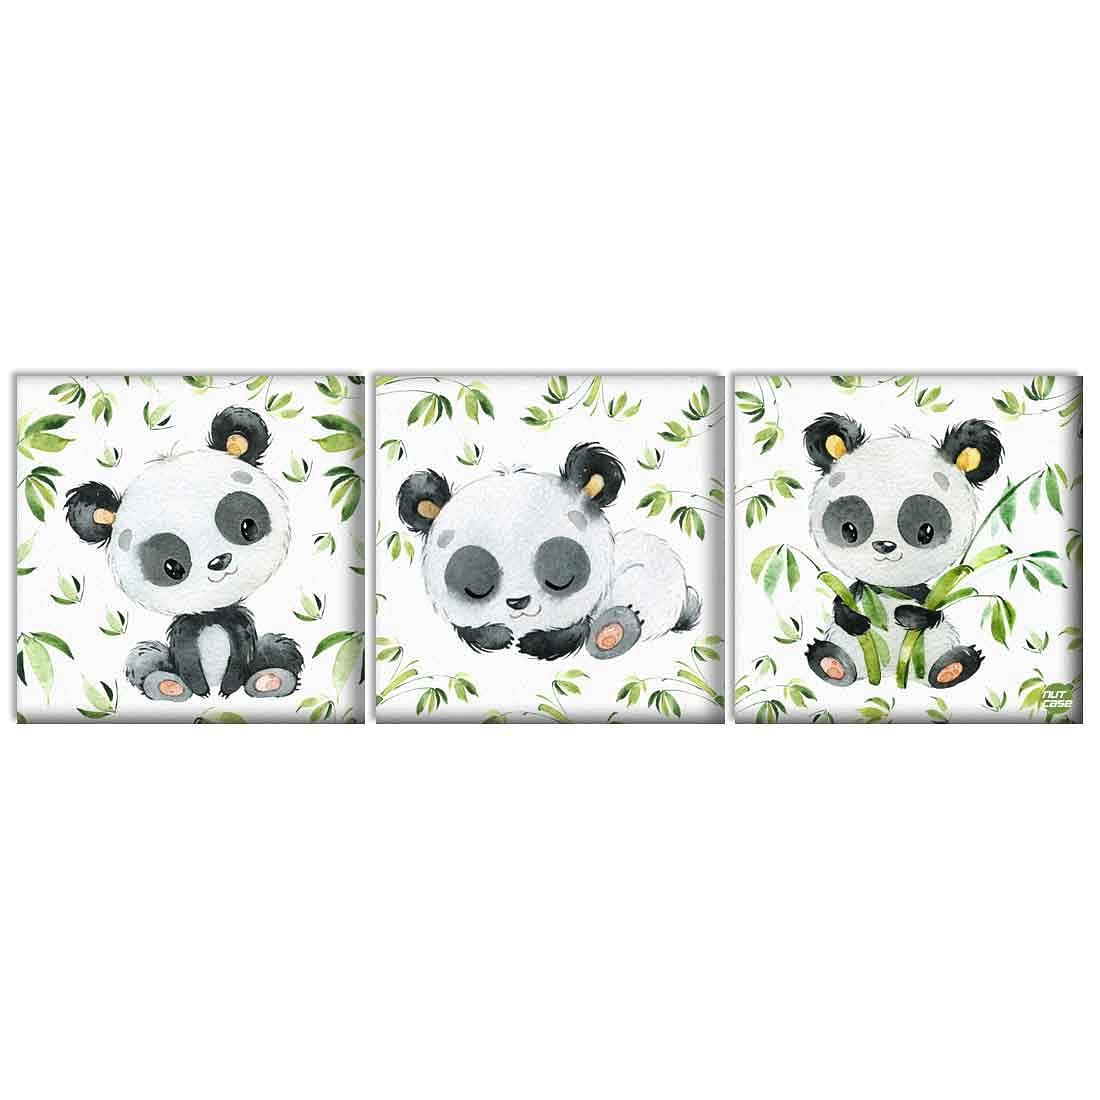 Wall Art Decor Hanging Panels Set Of 3 - Lovely Panda Nutcase